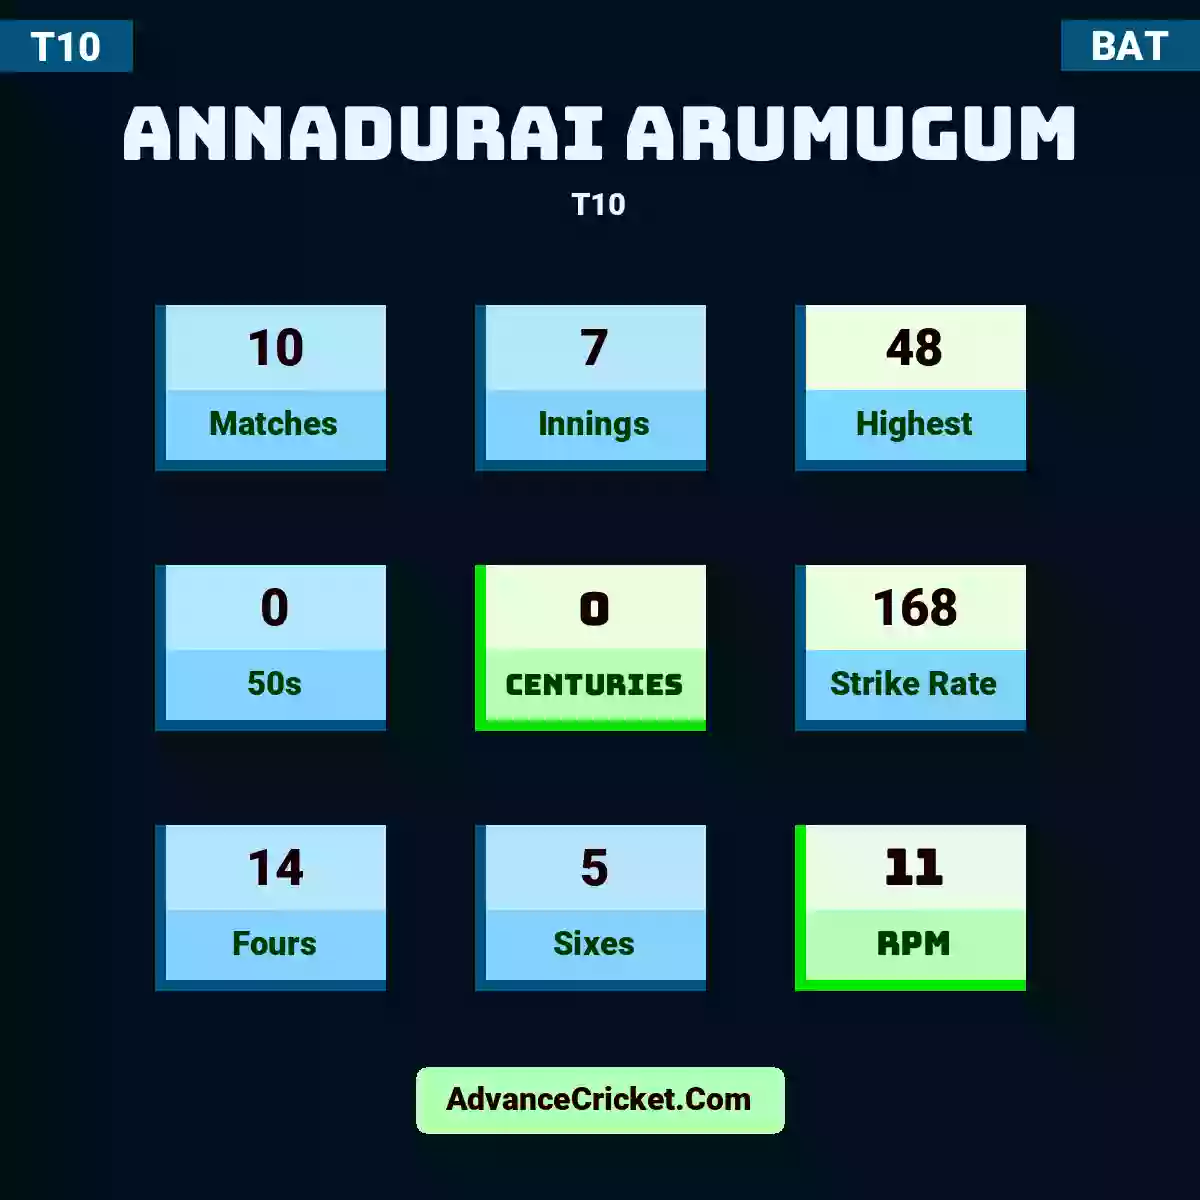 Annadurai Arumugum T10 , Annadurai Arumugum played 10 matches, scored 48 runs as highest, 0 half-centuries, and 0 centuries, with a strike rate of 168. A.Arumugum hit 14 fours and 5 sixes, with an RPM of 11.